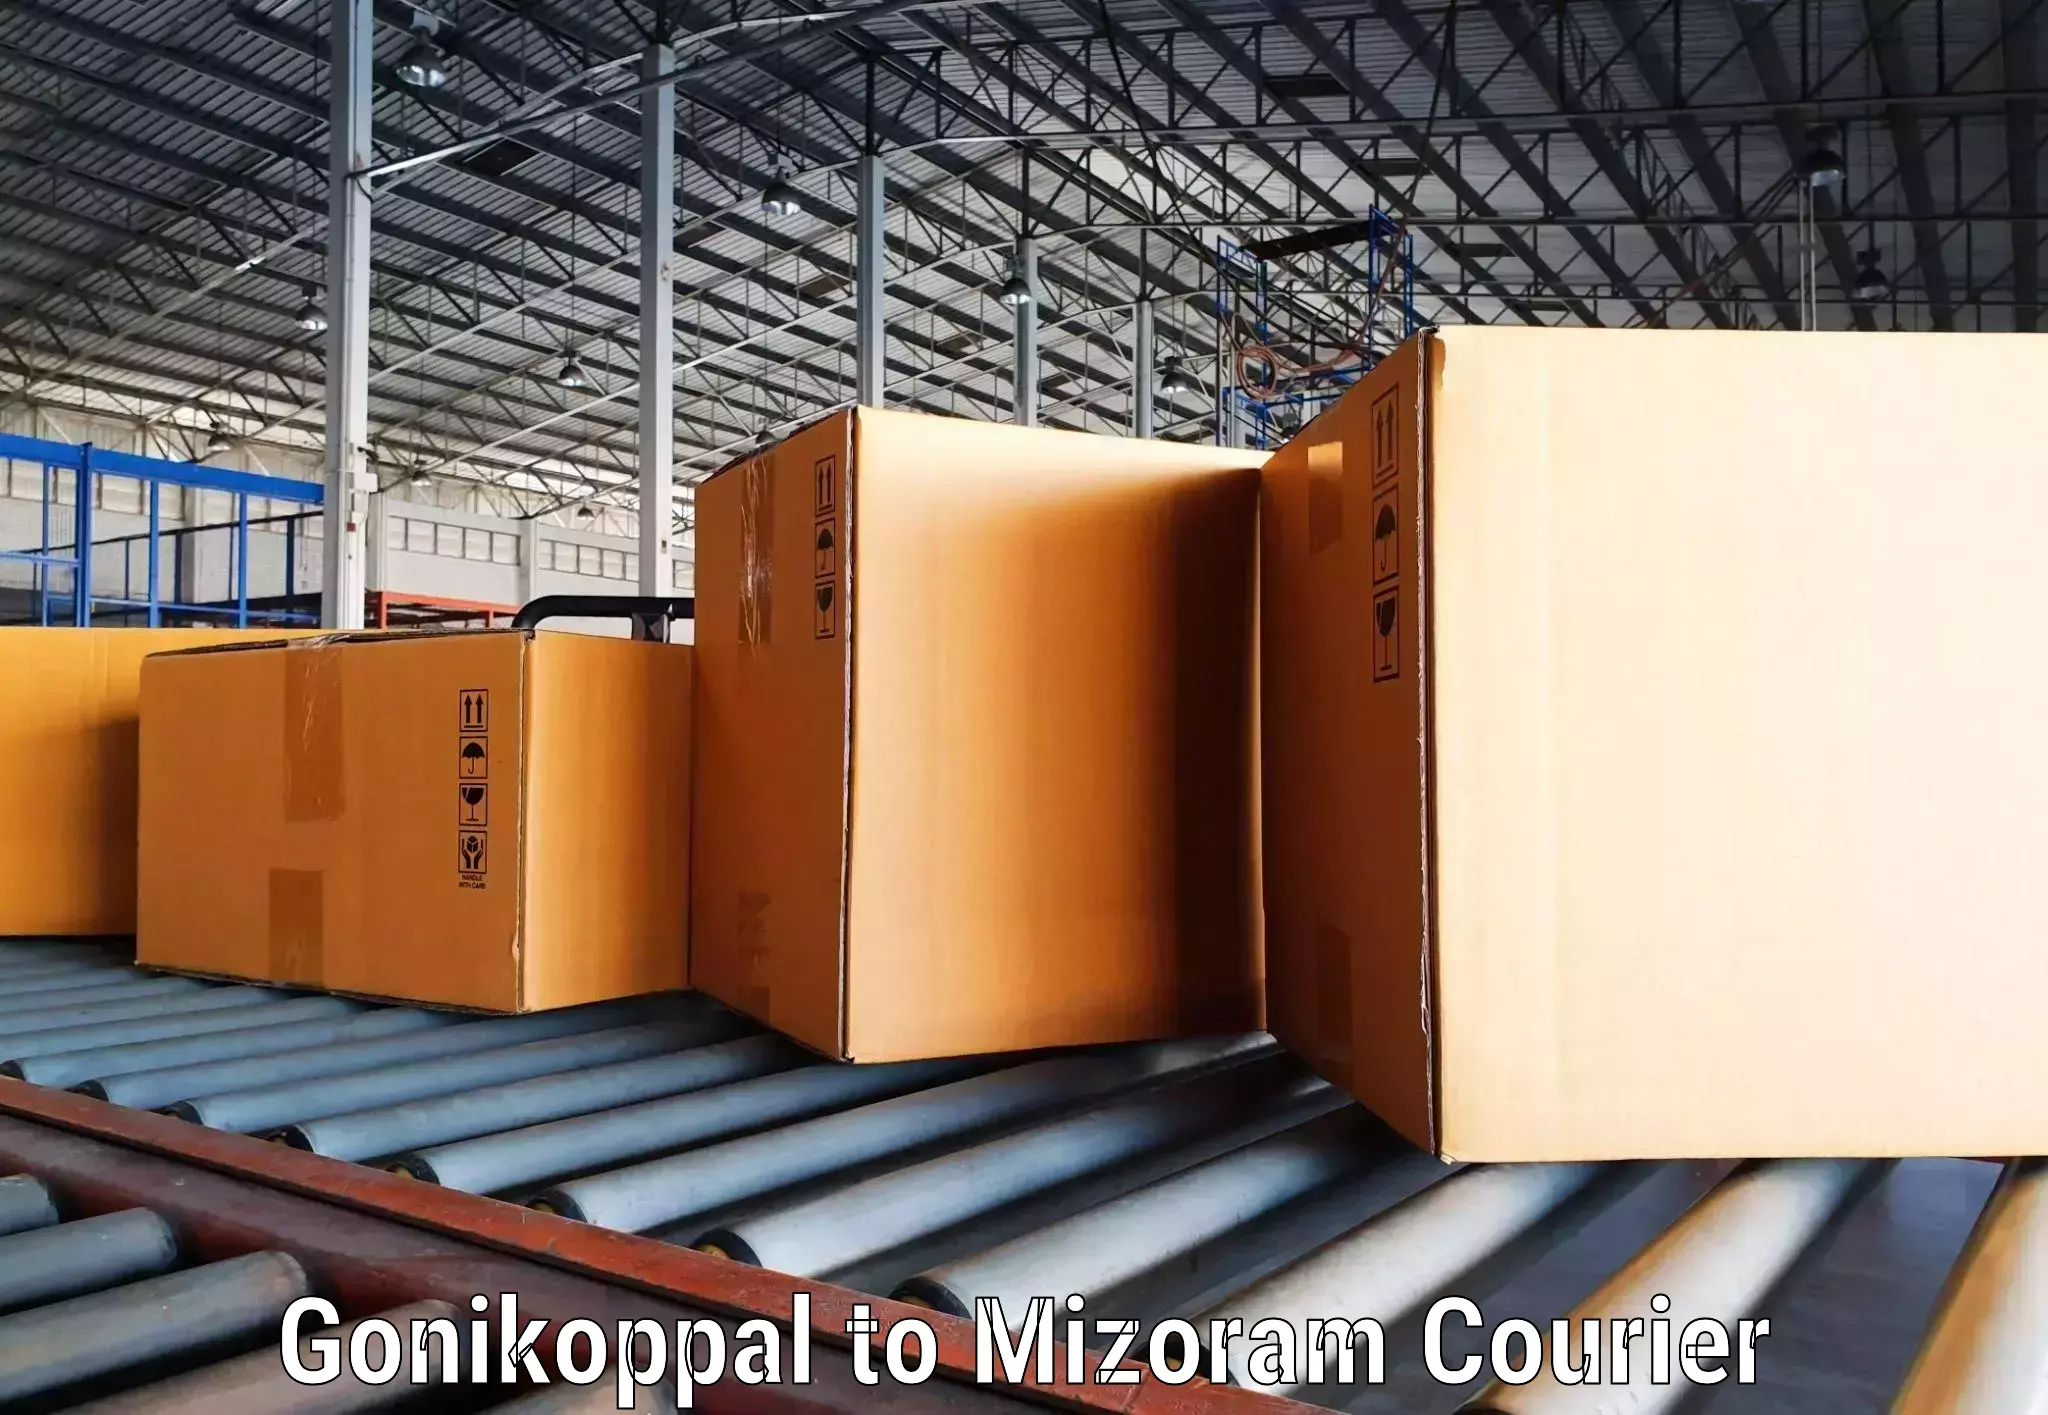 Customer-centric shipping Gonikoppal to Aizawl